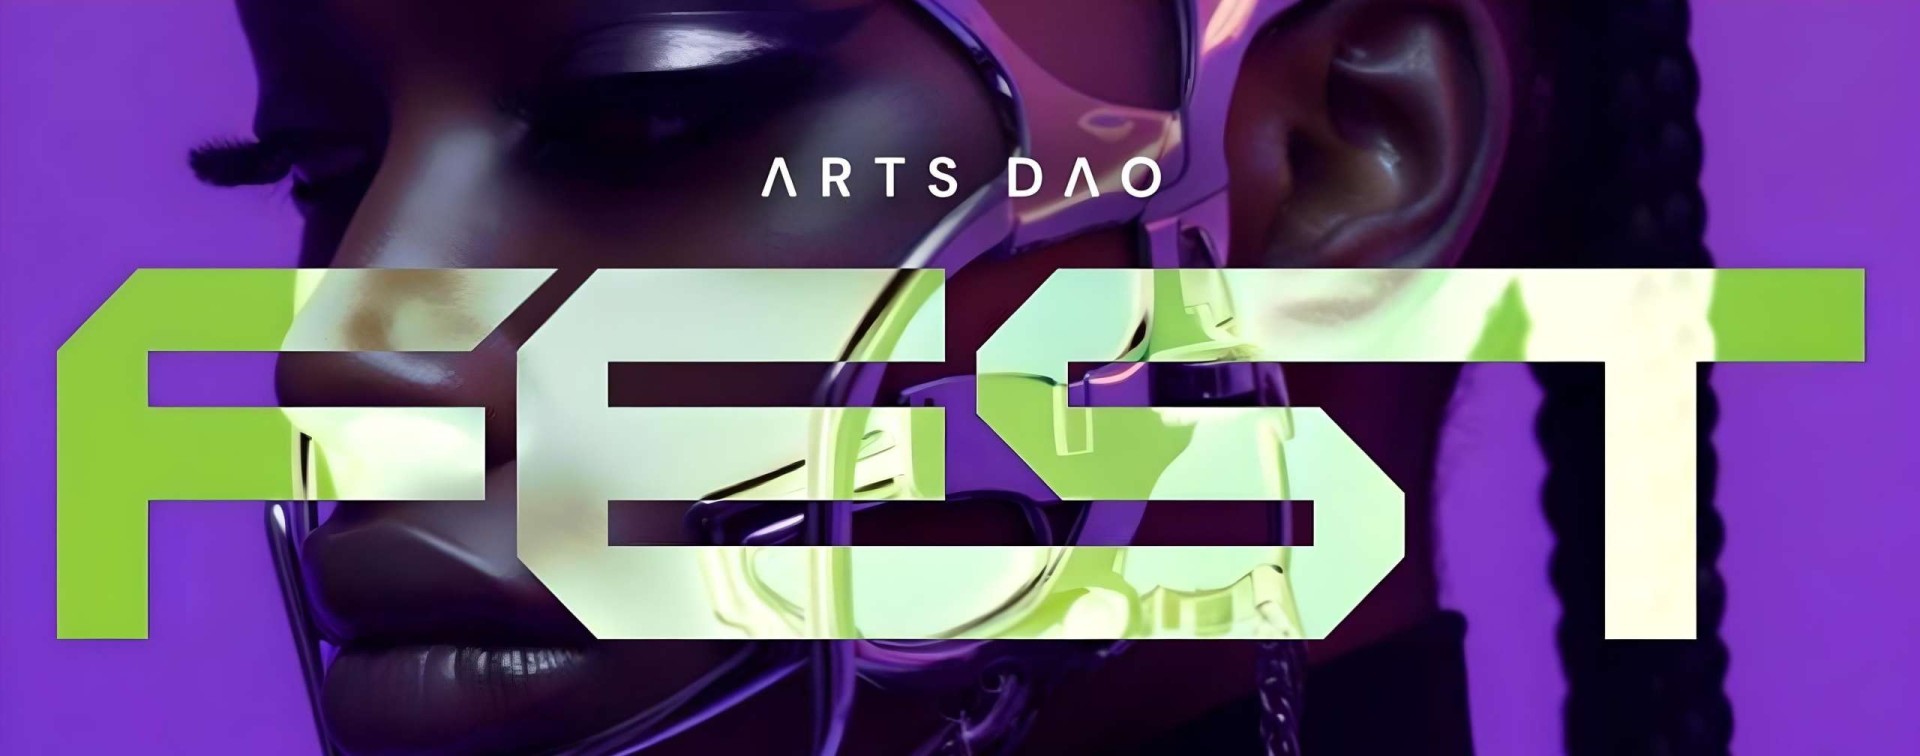 Arts DAO Fest returns to Dubai with a celebration of Web3 culture - Corporate Press Release - News